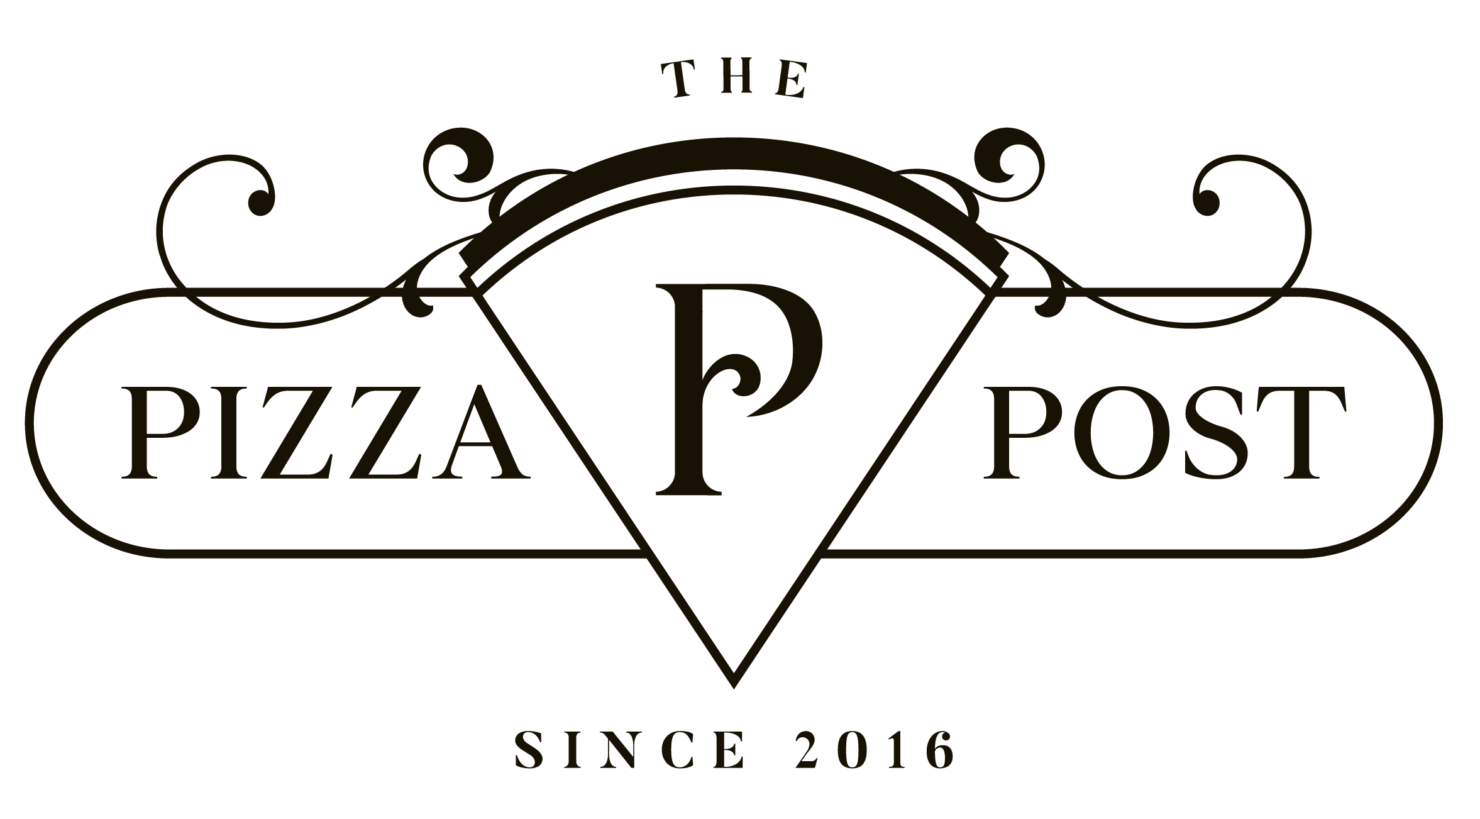 Pizza Post Logo